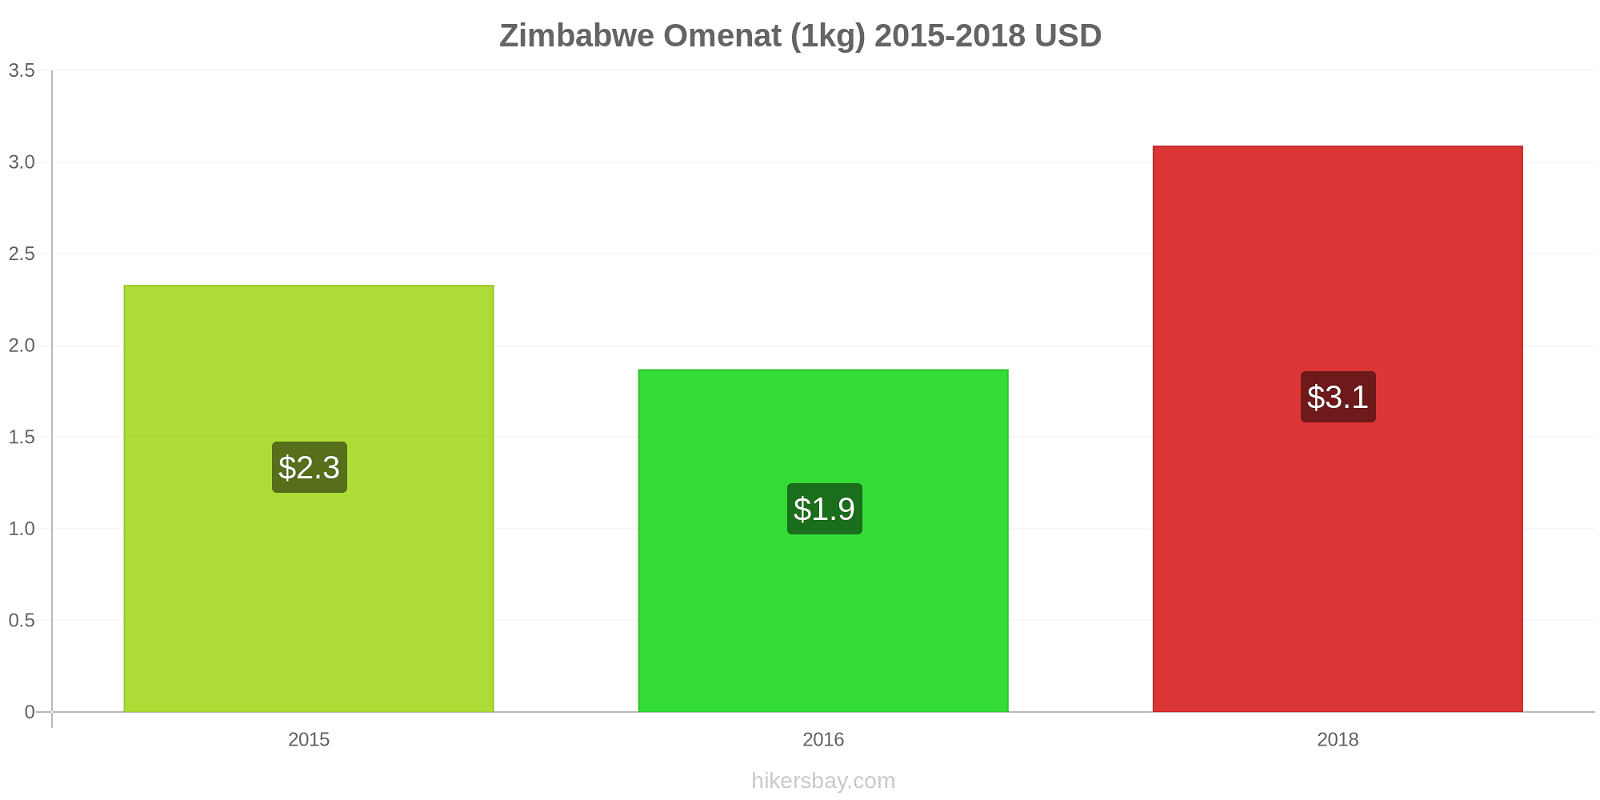 Zimbabwe hintojen muutokset Omenat (1kg) hikersbay.com